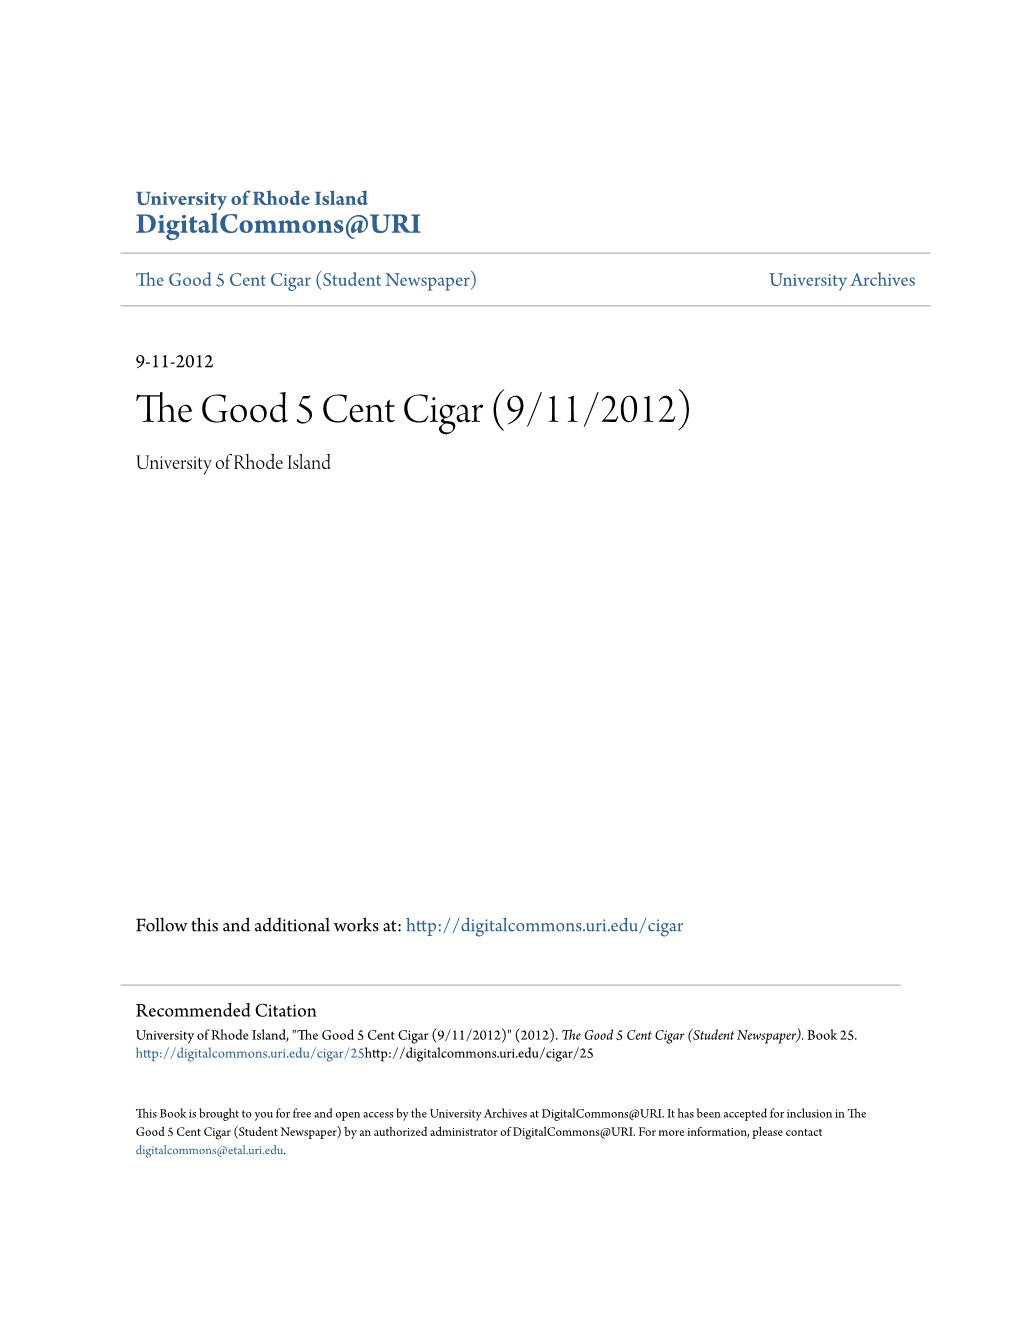 The Good 5 Cent Cigar (9/11/2012) University of Rhode Island